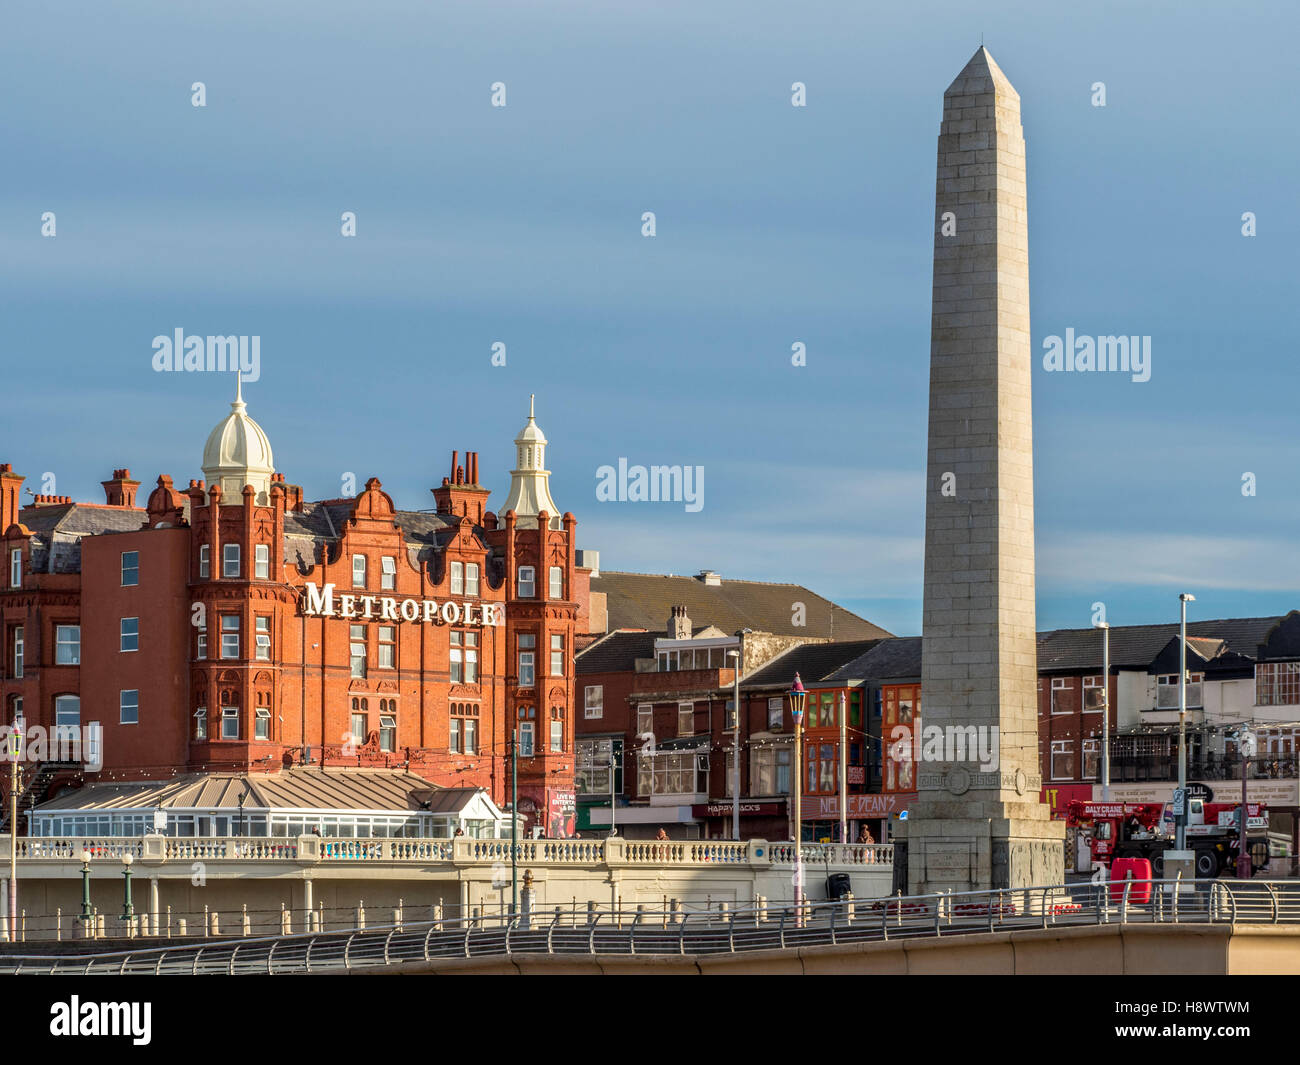 War monument and Metropole Hotel, North seafront, Blackpool, Lancashire, UK. Stock Photo